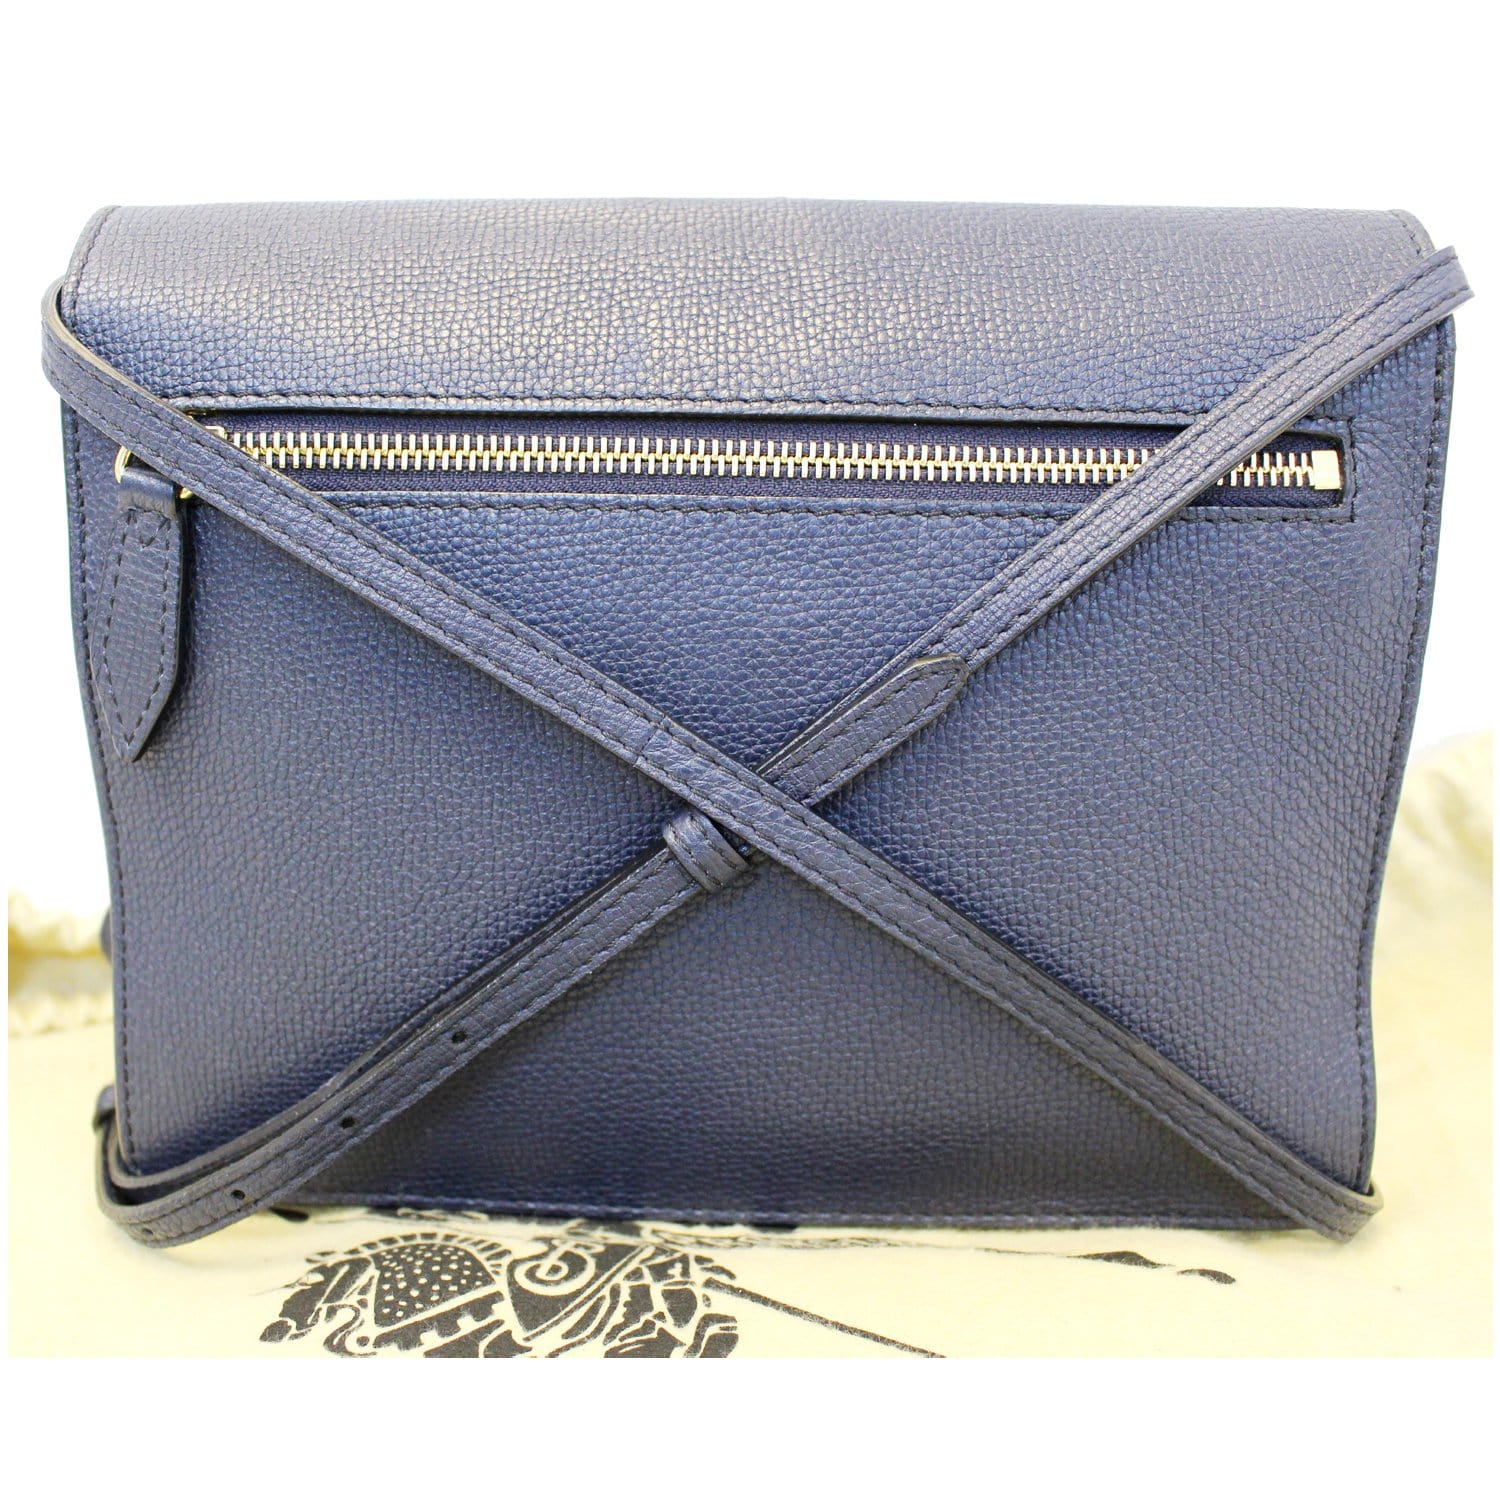 Burberry Small Vintage Check/Leather Crossbody Bag Dark Blue-US